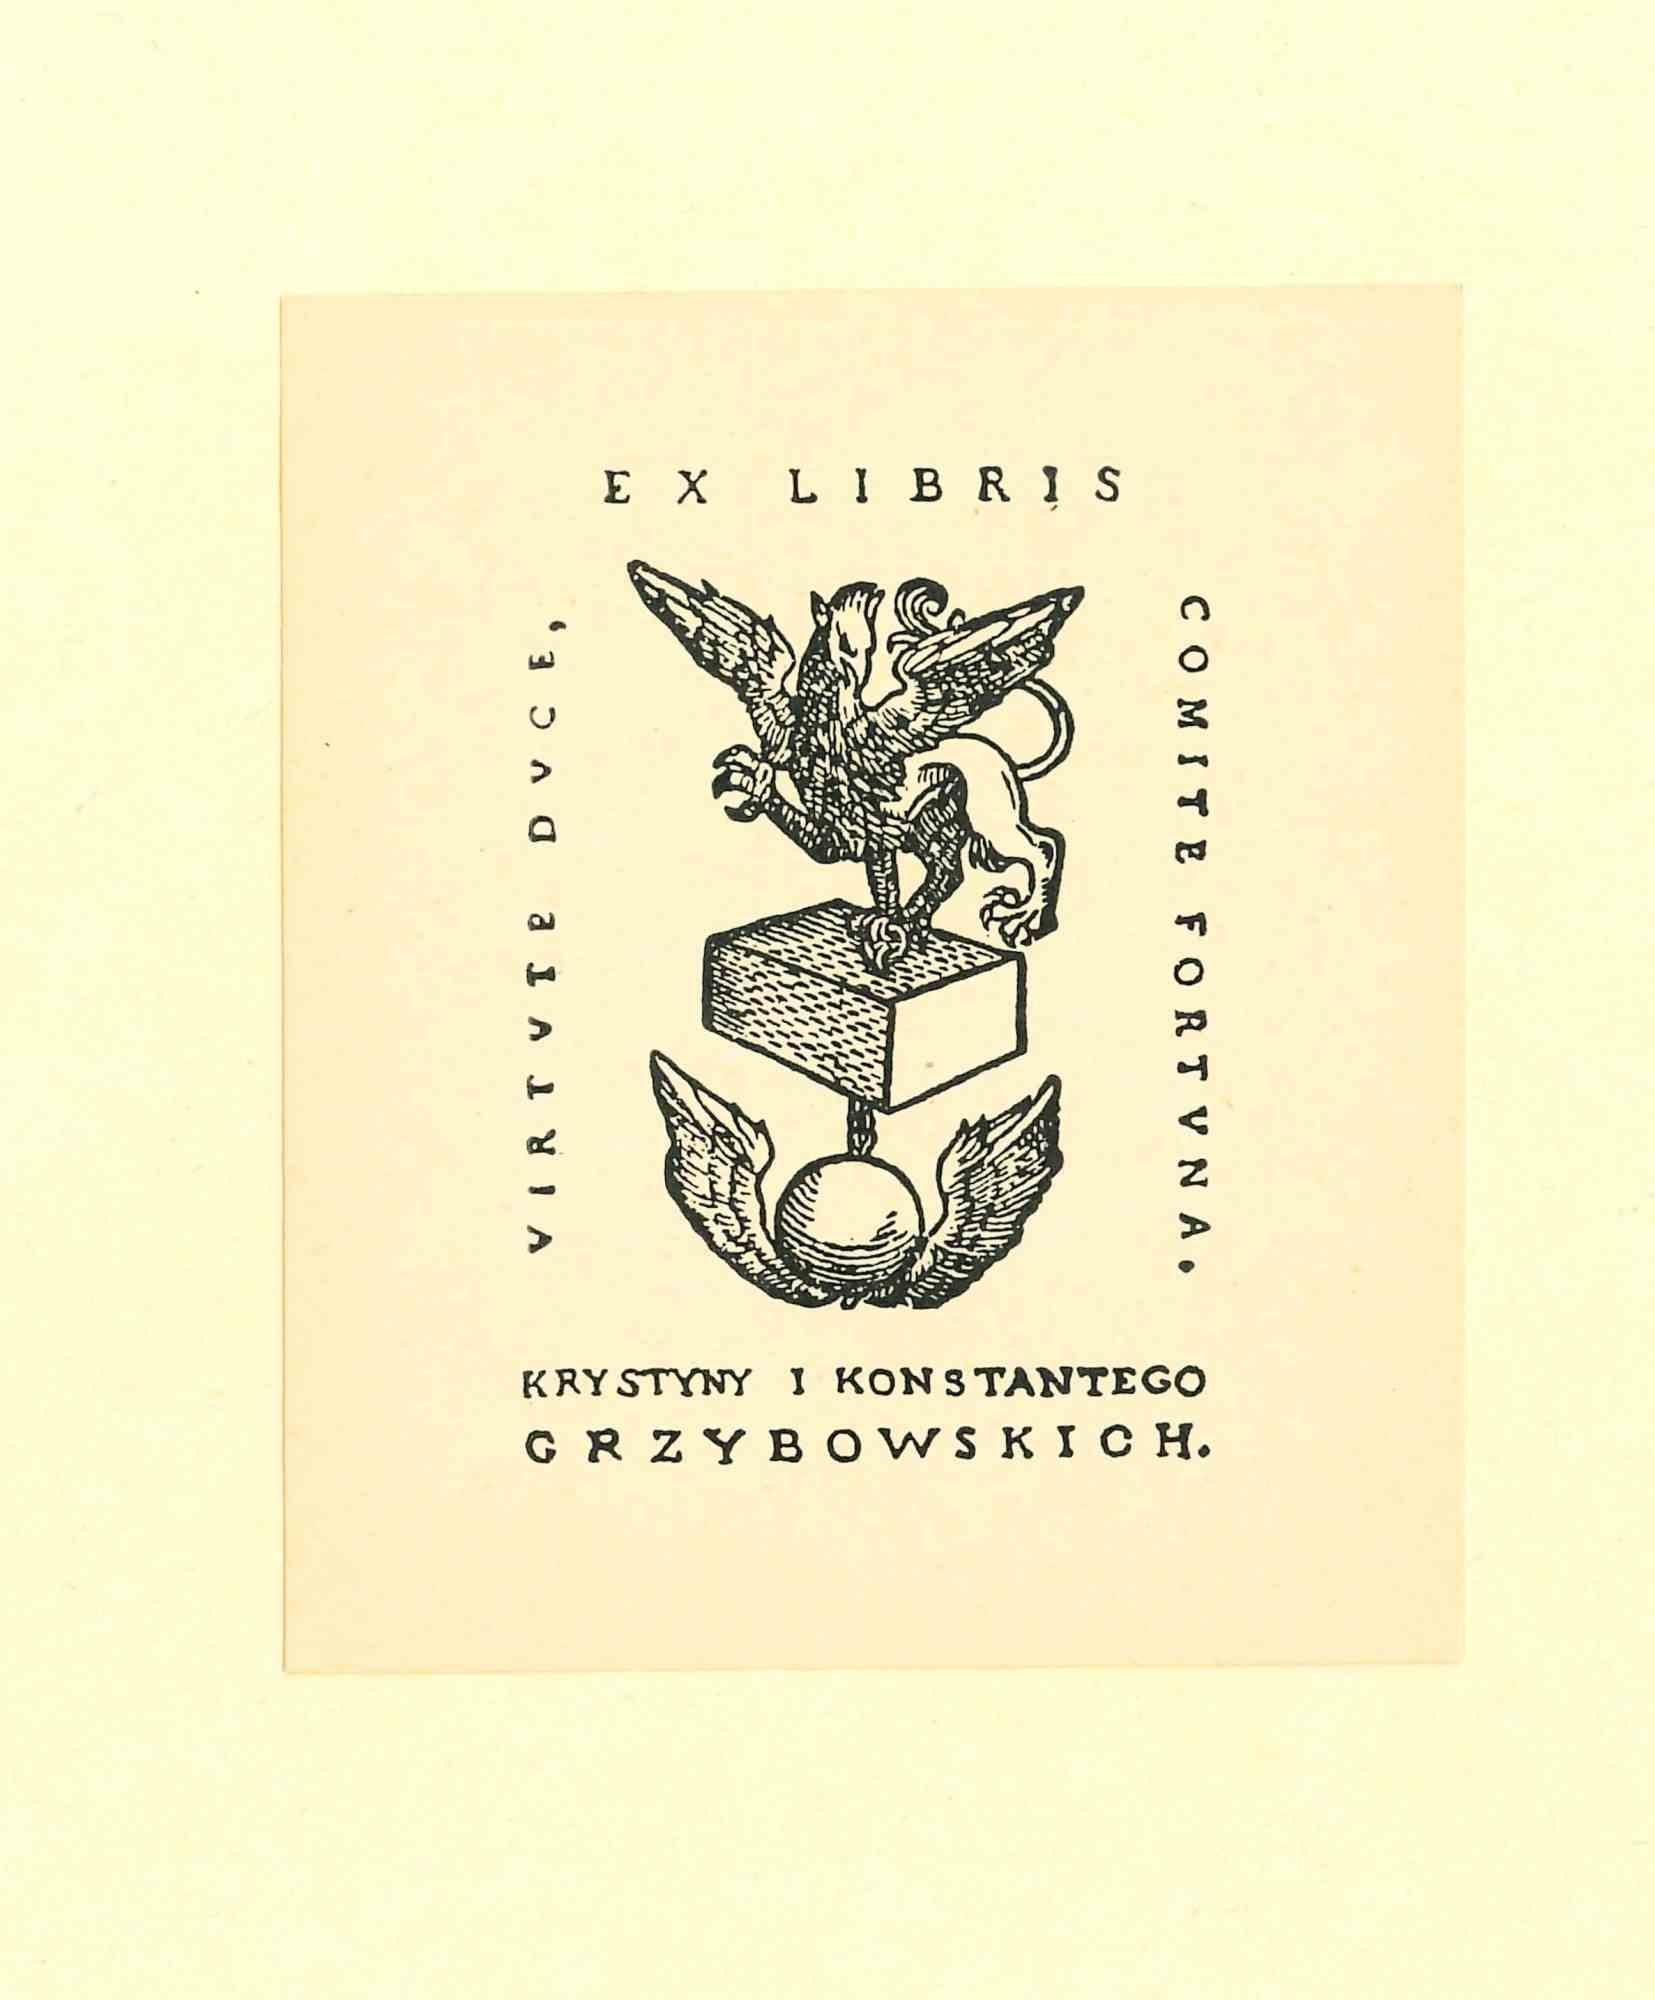 Unknown Figurative Print - Ex Libris Grzybowskioh - Original Woodcut - 1930